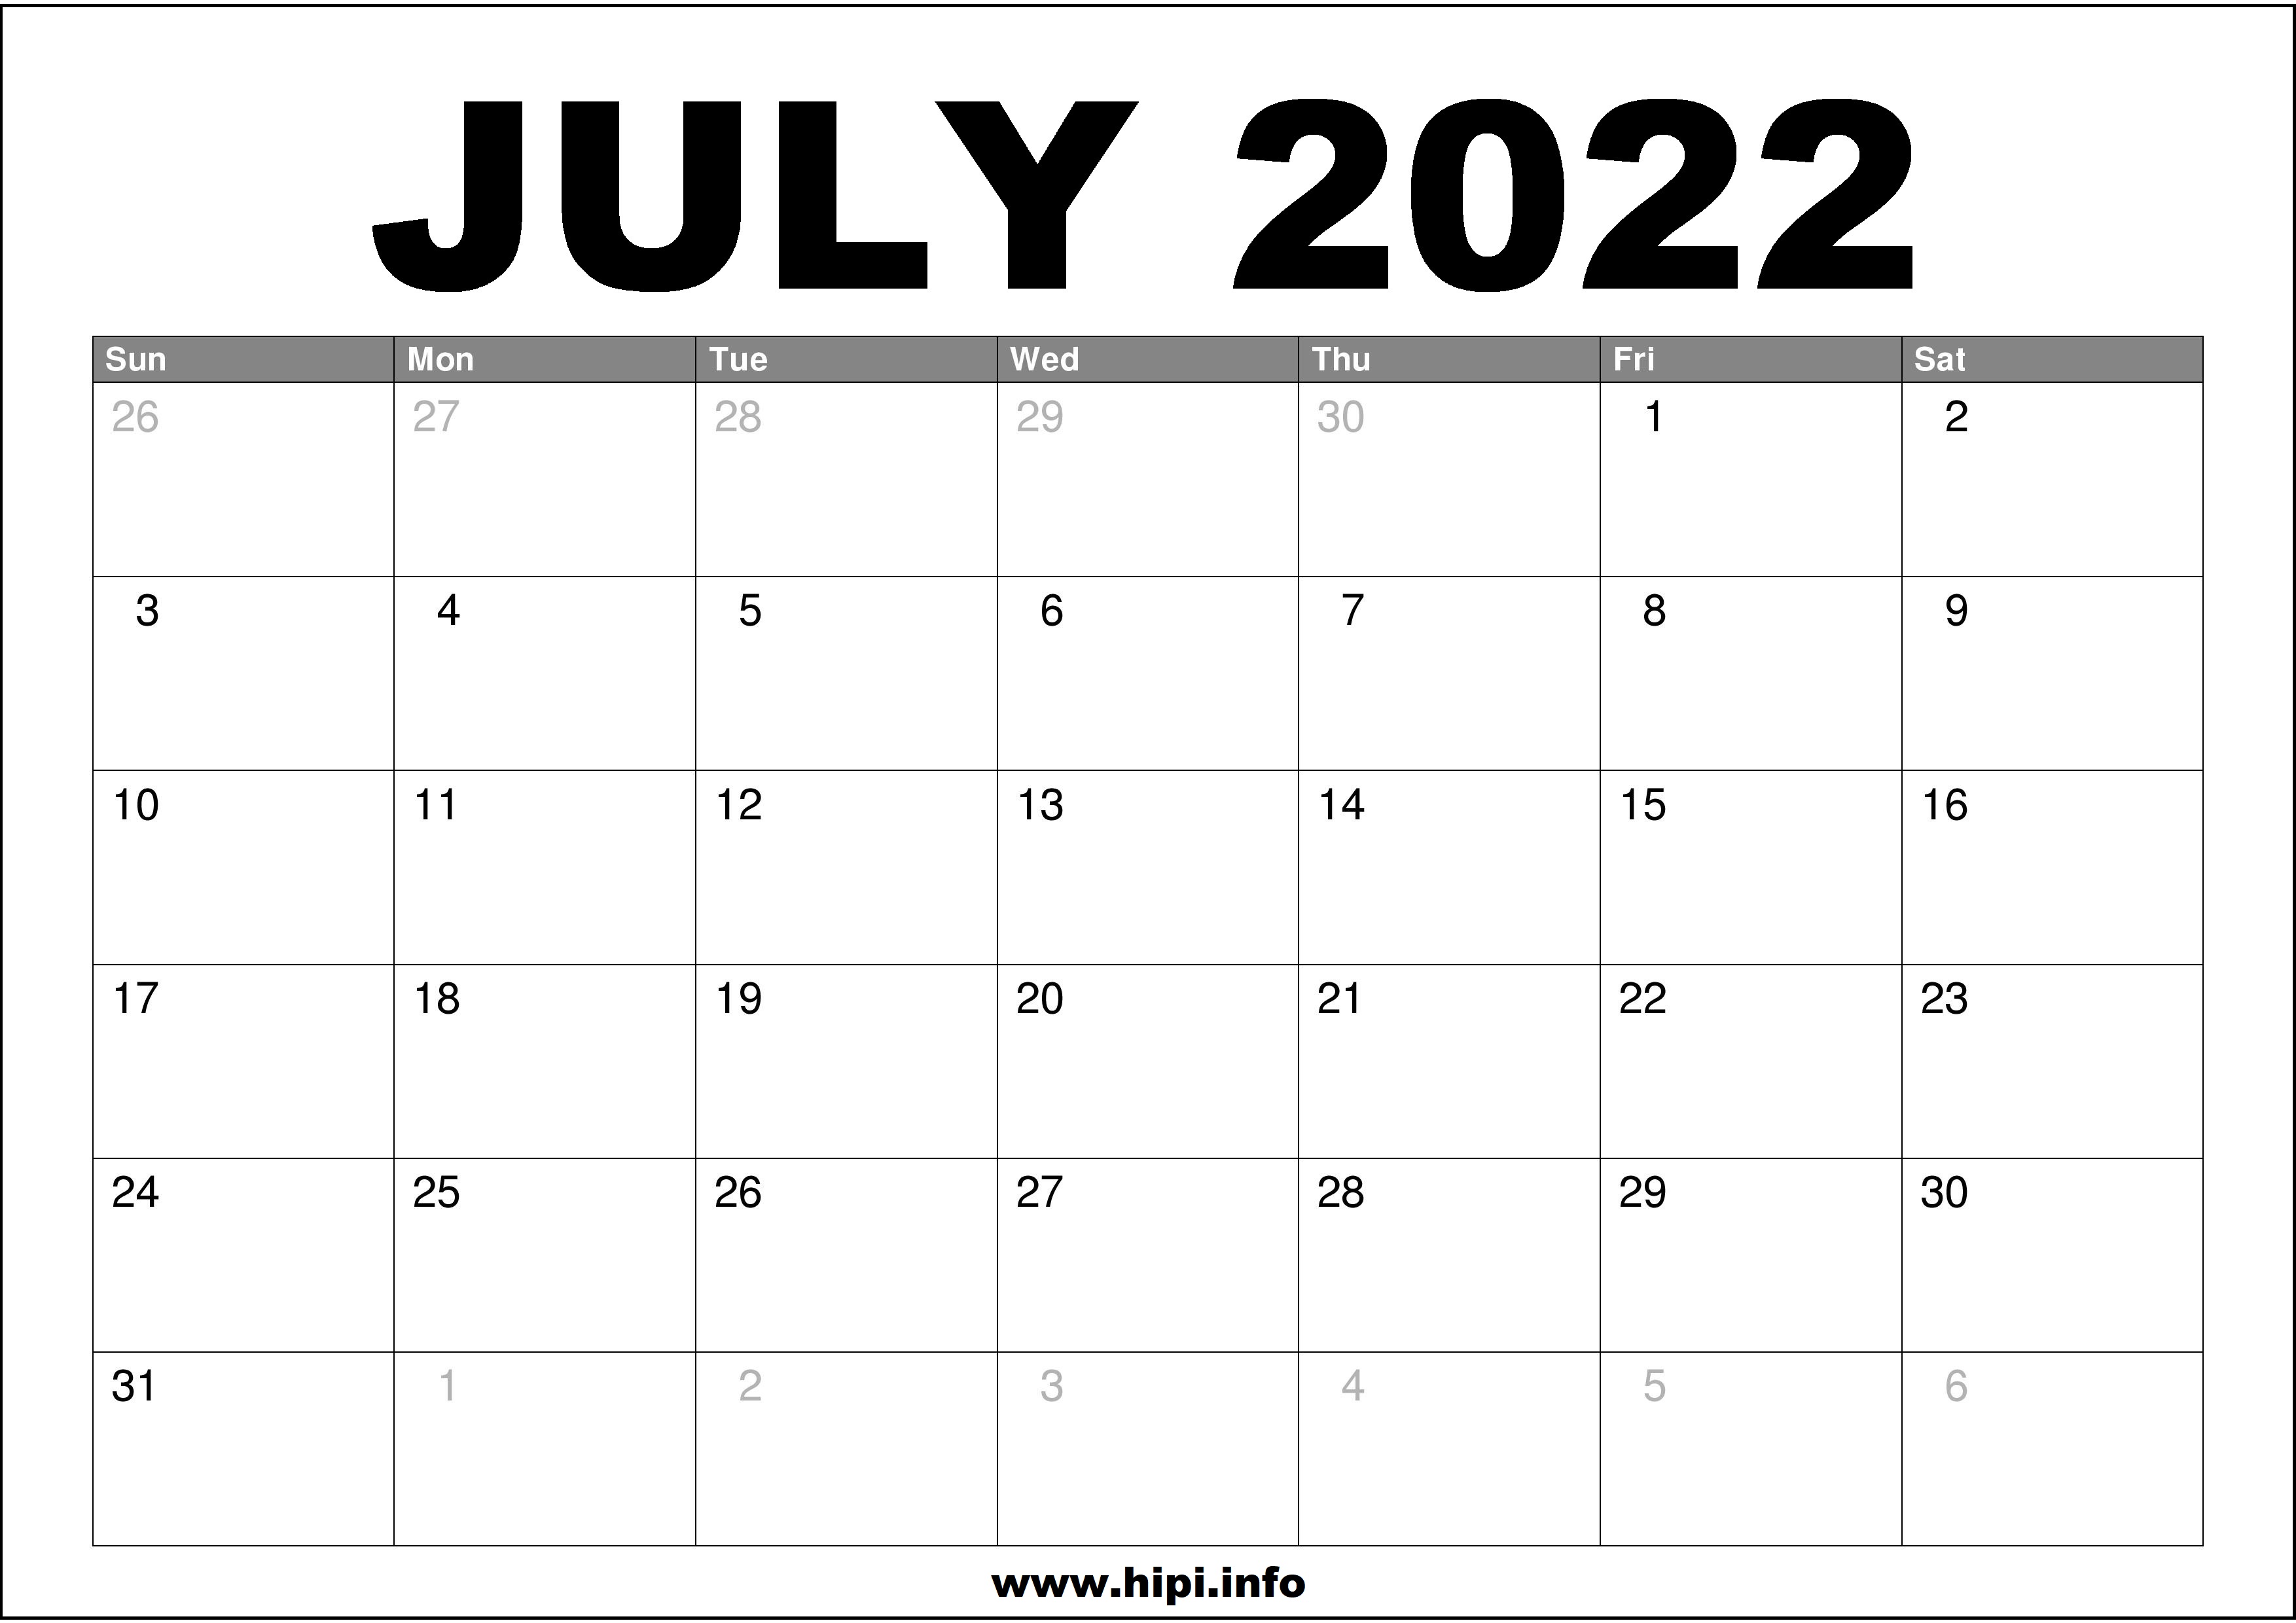 Monthly Calendar July 2022 July 2022 Calendar Printable Free - Hipi.info | Calendars Printable Free